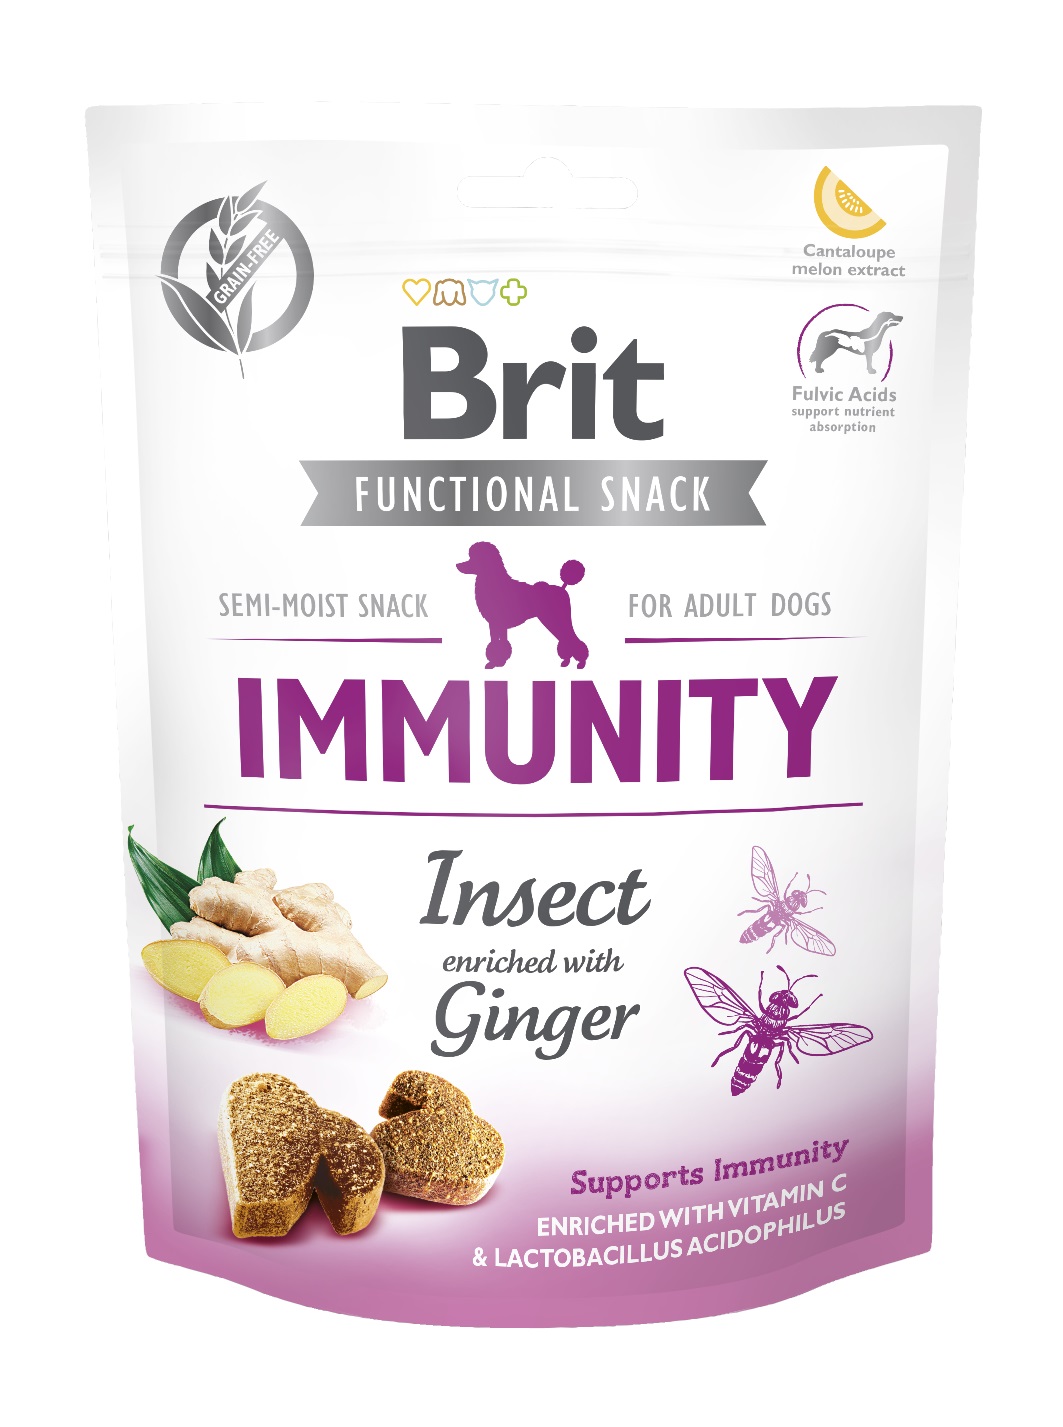 BRIT snack IMMUNITY isect/ginger